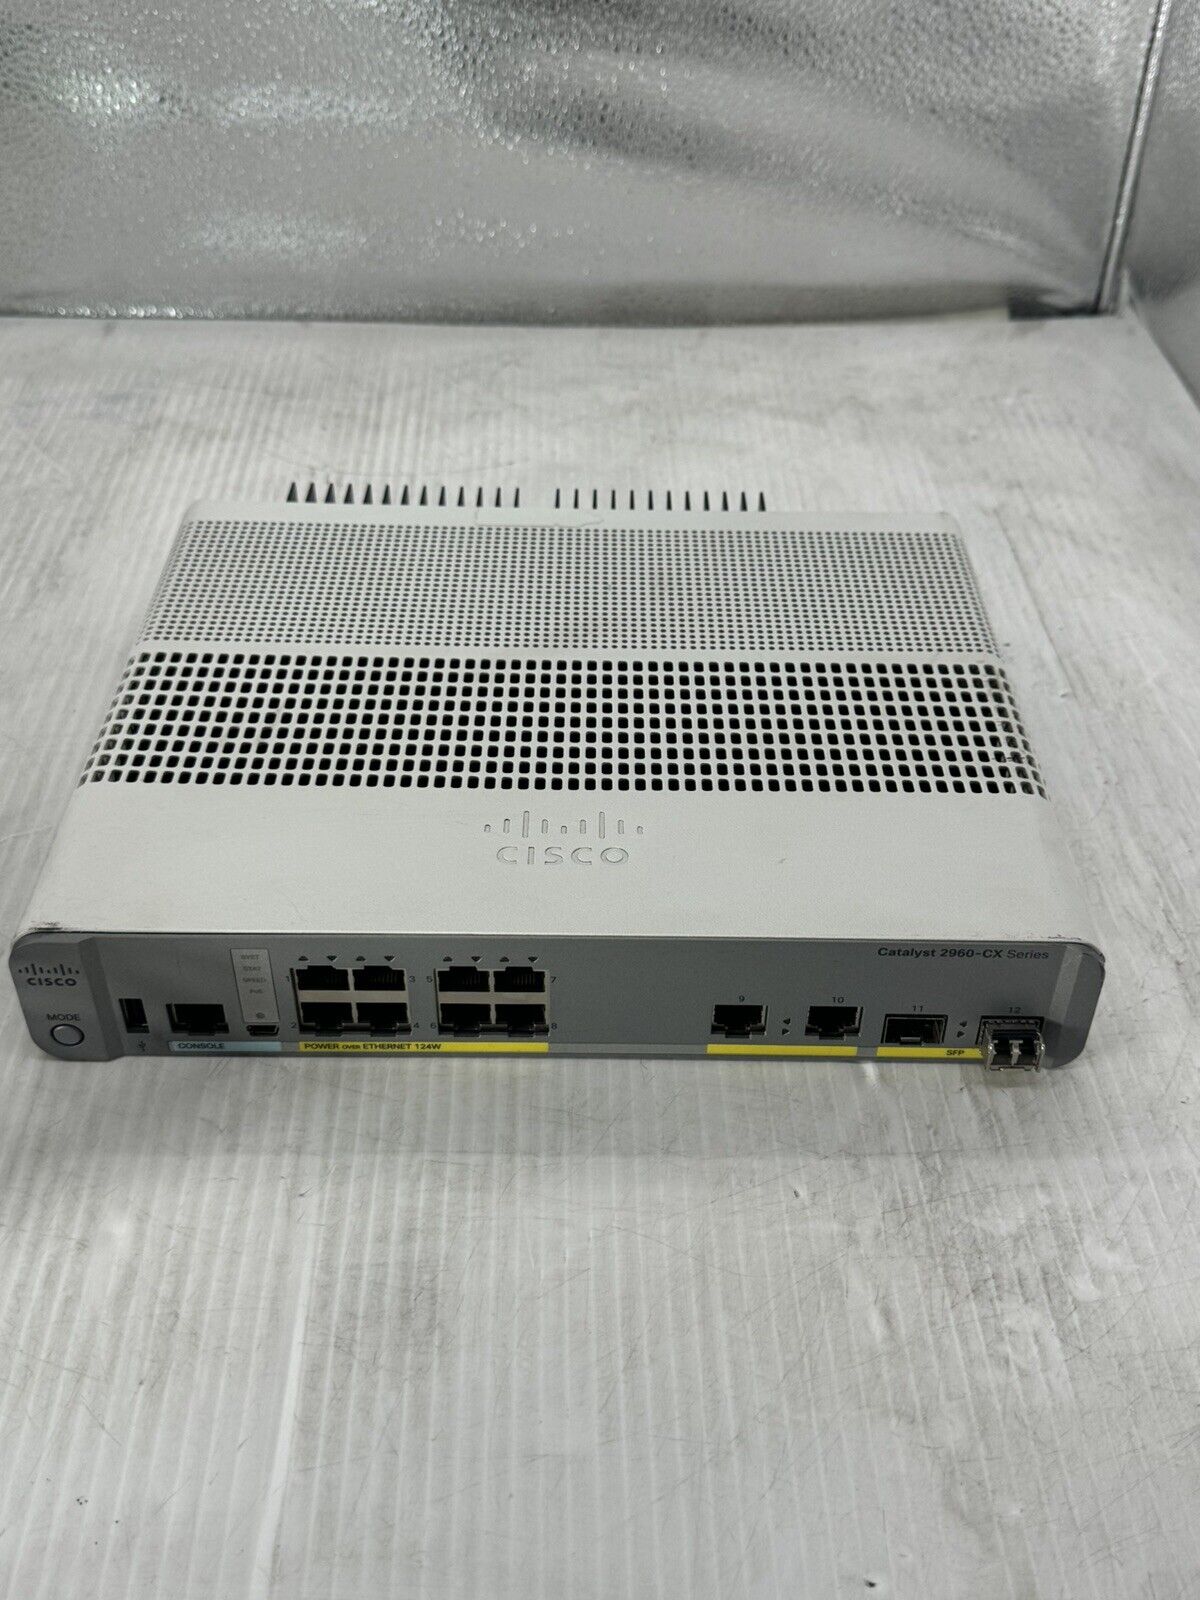 Cisco Catalyst 2960-CX  Series 8 Port PoE LAN Base Switch (WS-C2960CX-8PC-L)